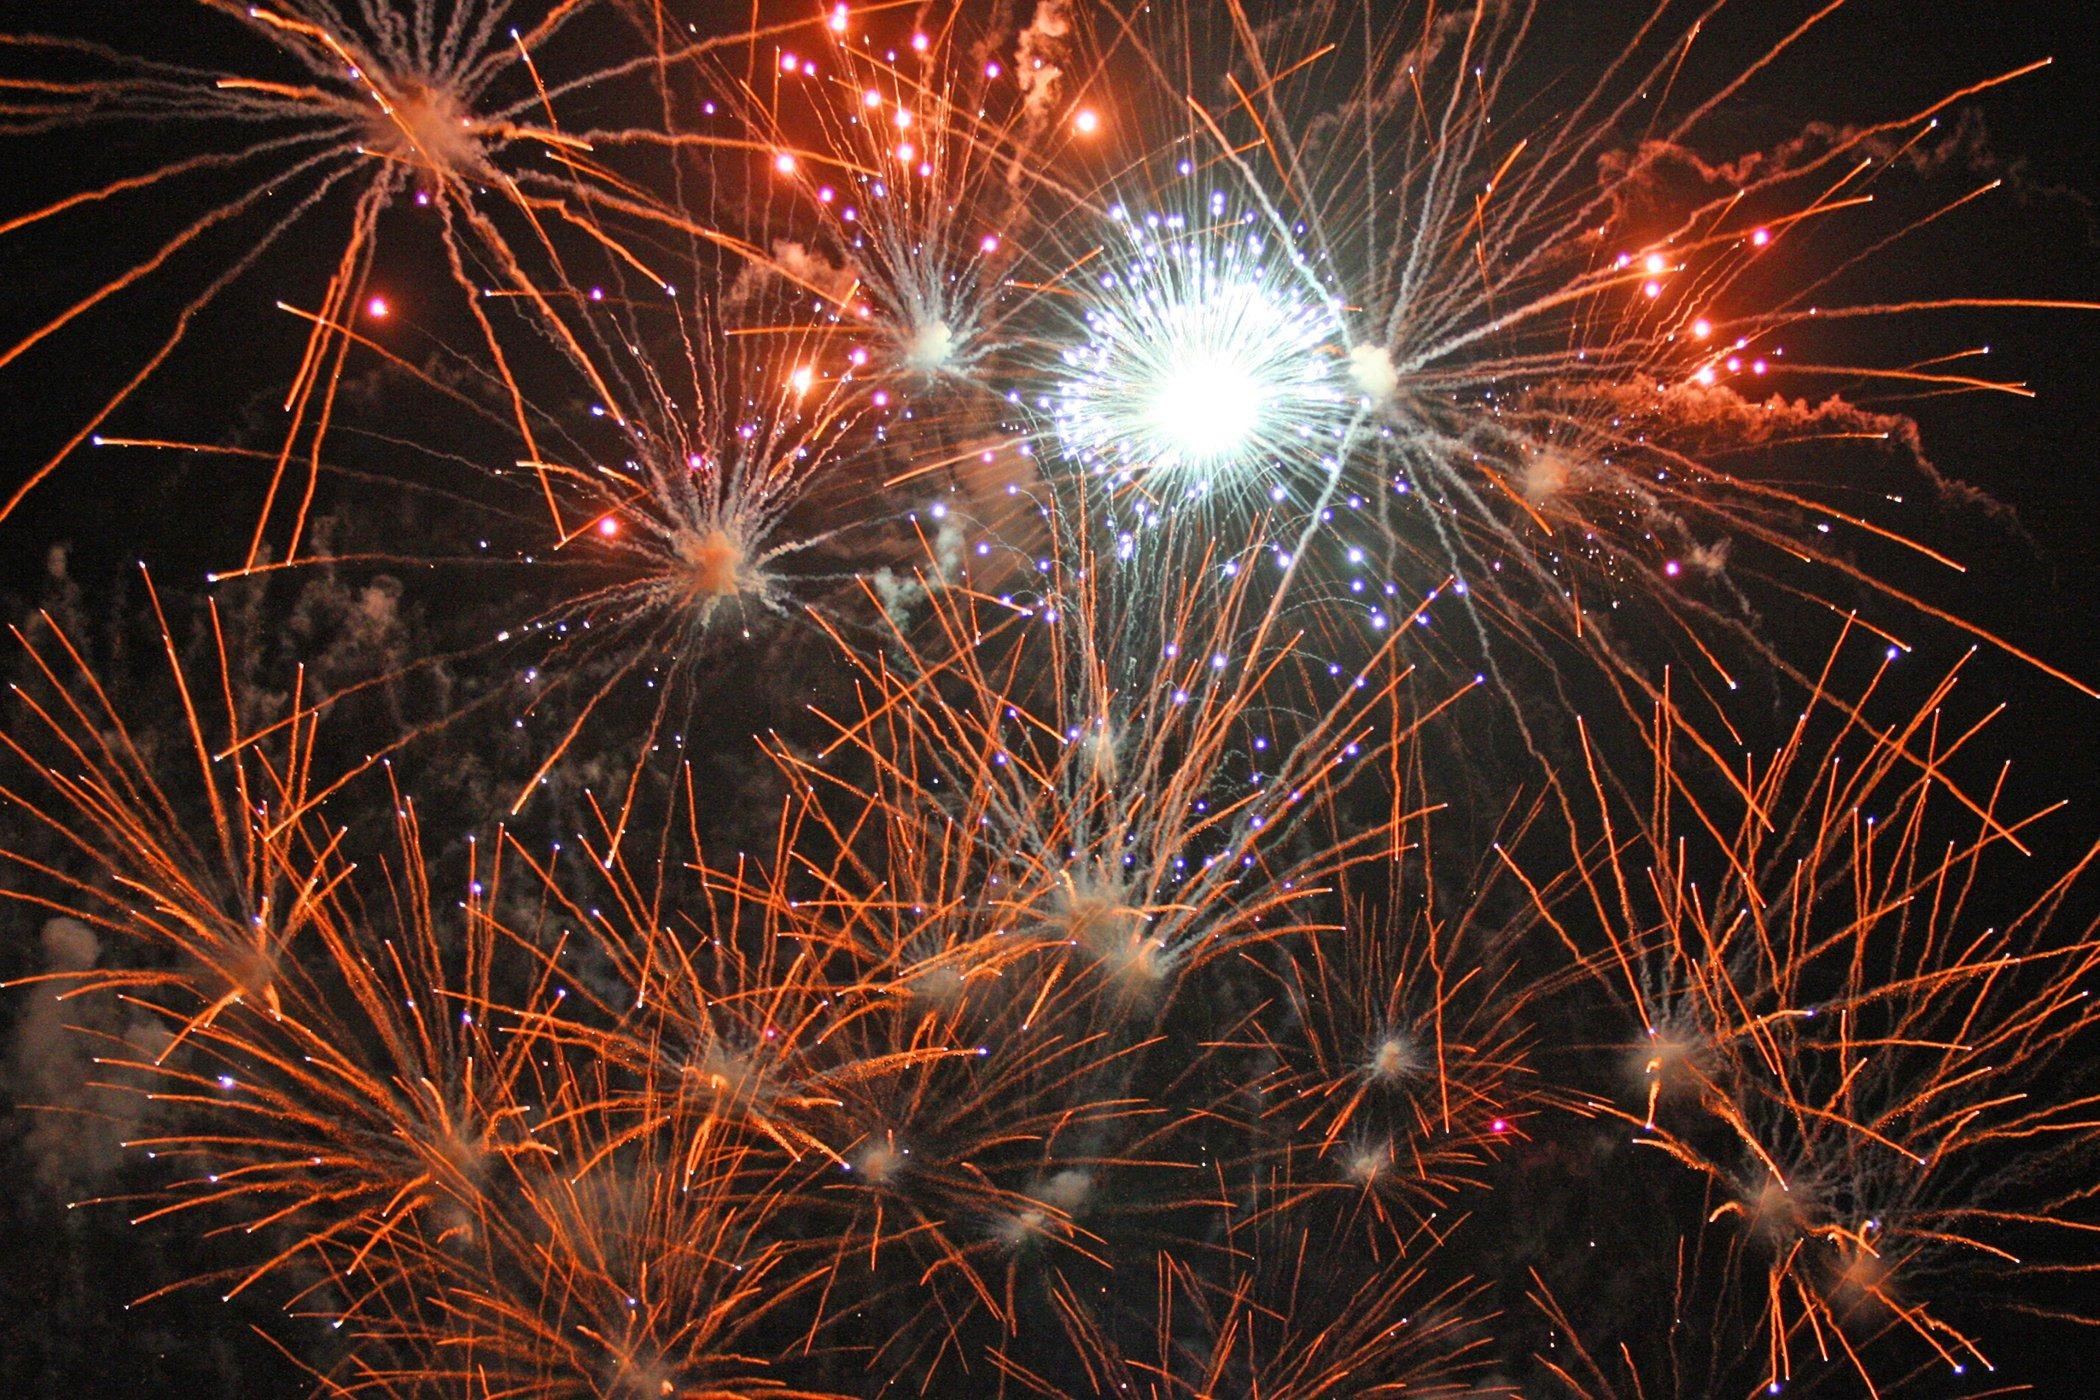 DM19110747a.jpg. Worthing fireworks night. Photo by Derek Martin Photography.